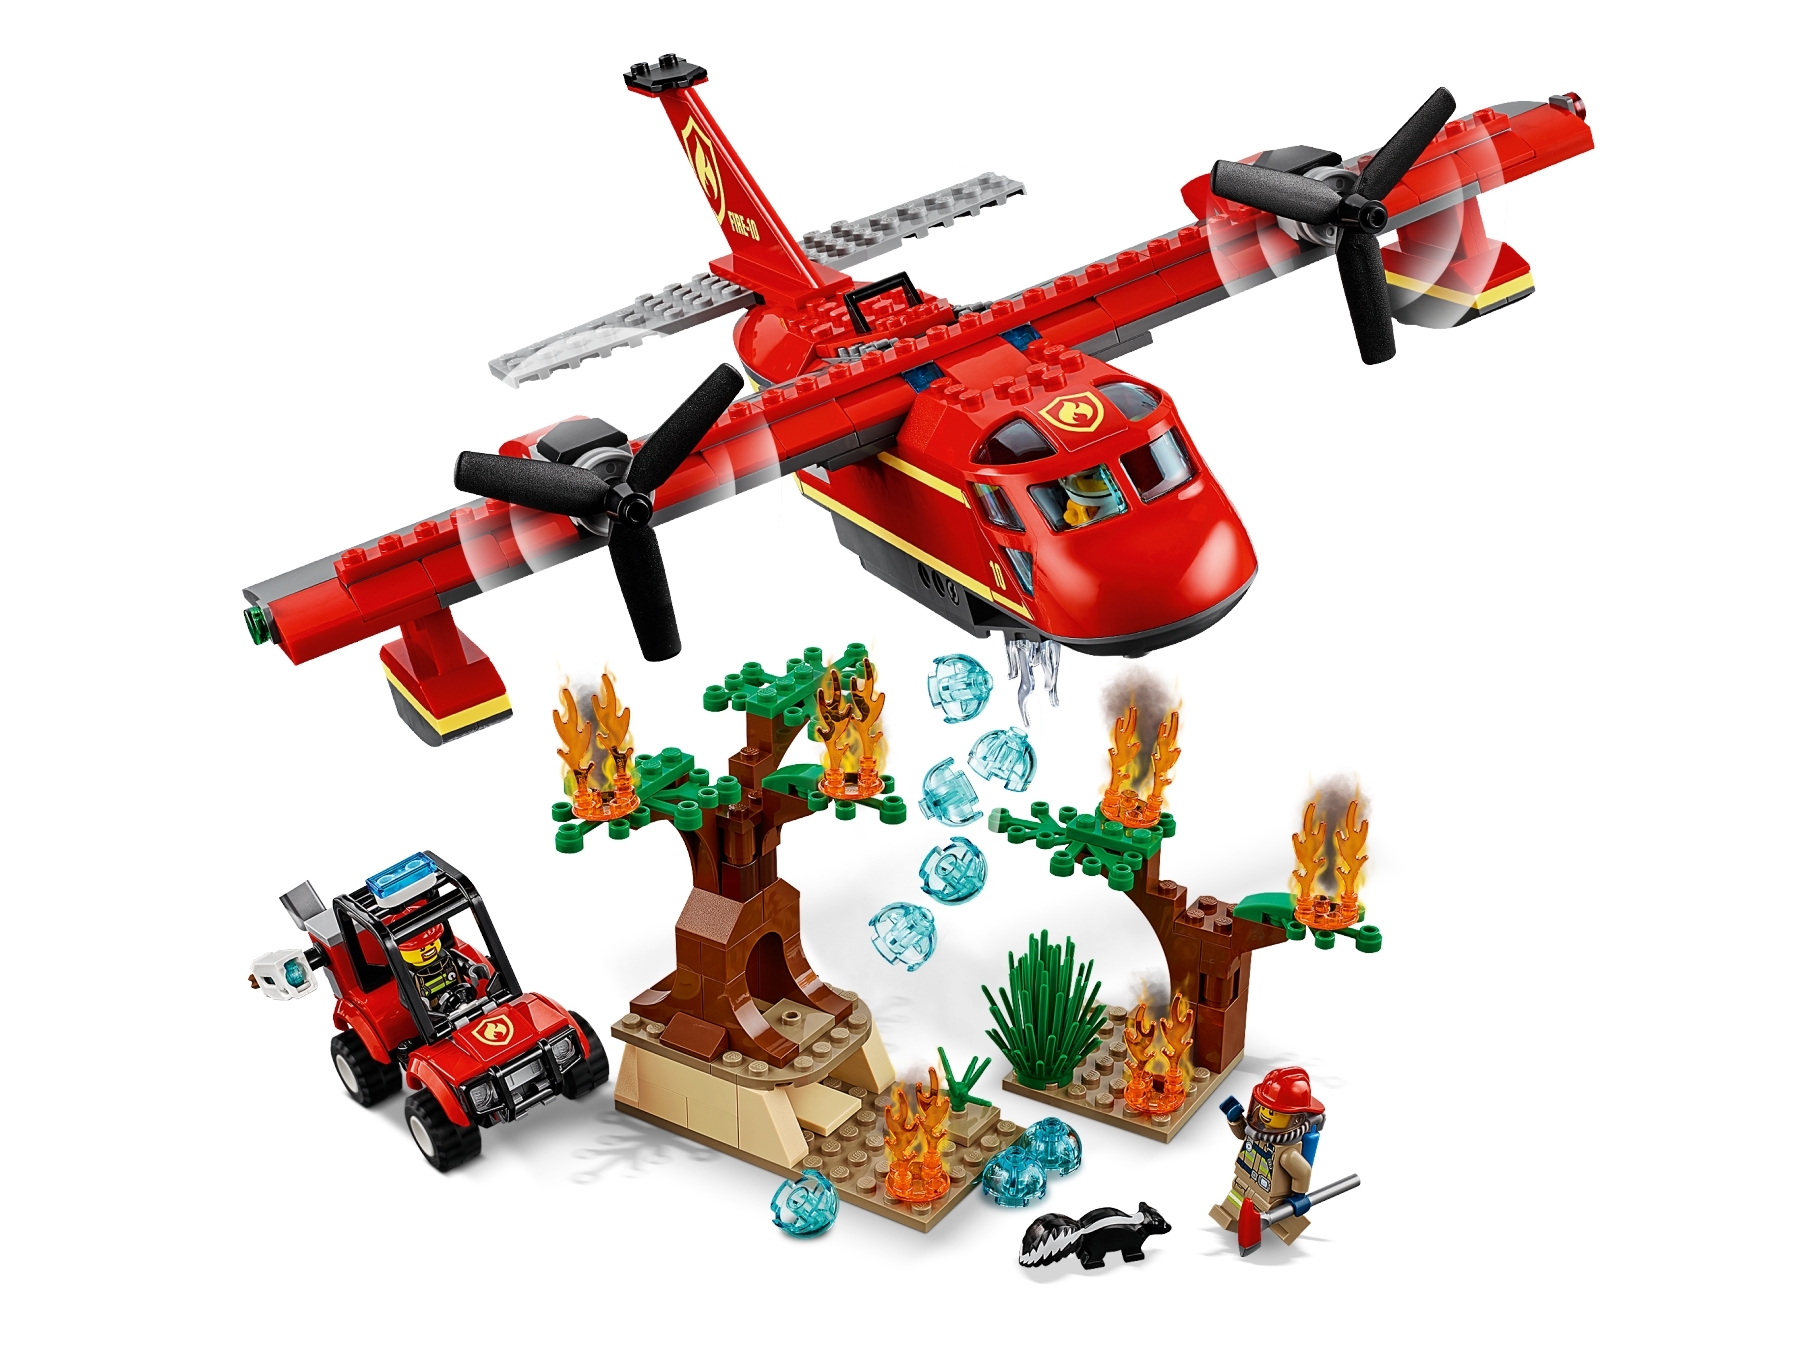 lego city red plane